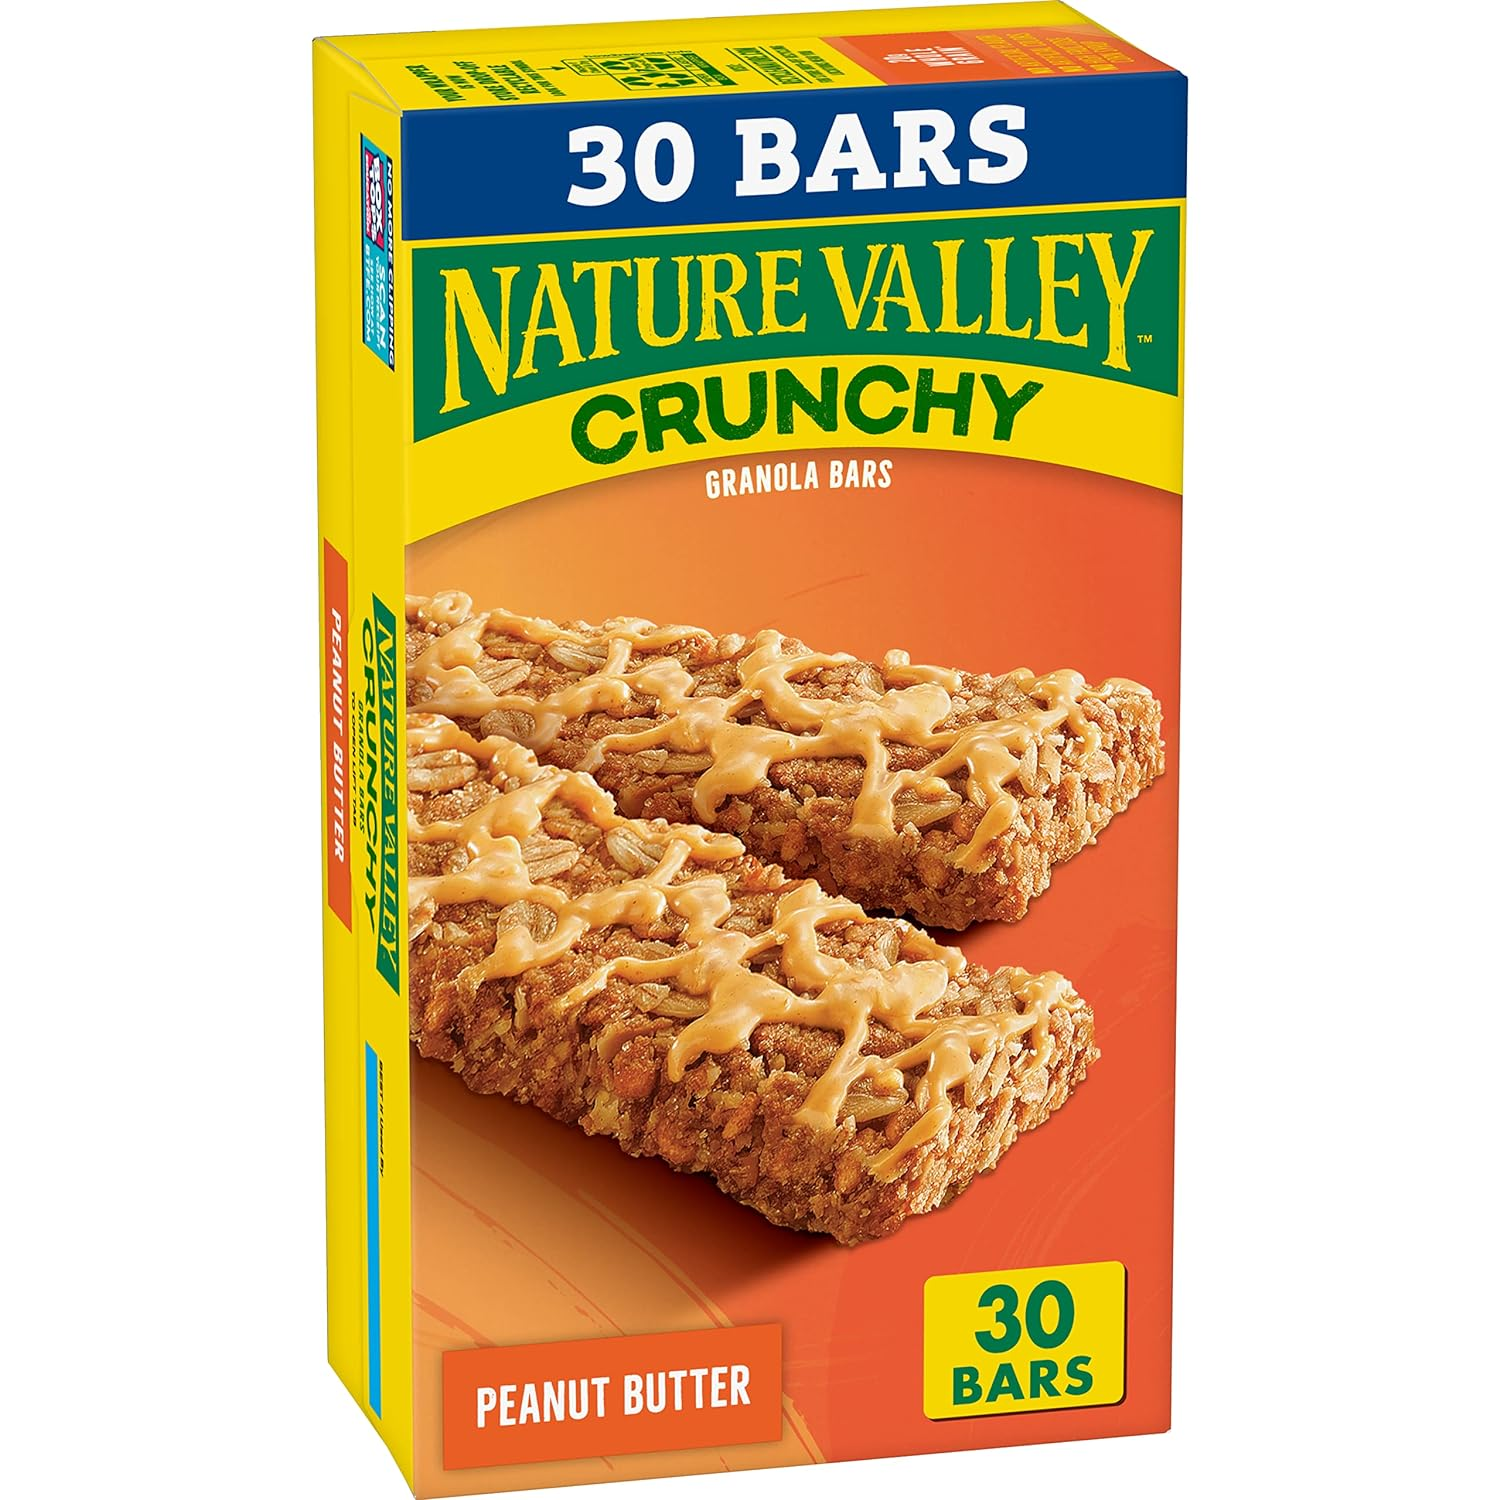 Nature Valley Crunchy Granola Bars, Peanut Butter, 15 ct, 30 bars $5.24